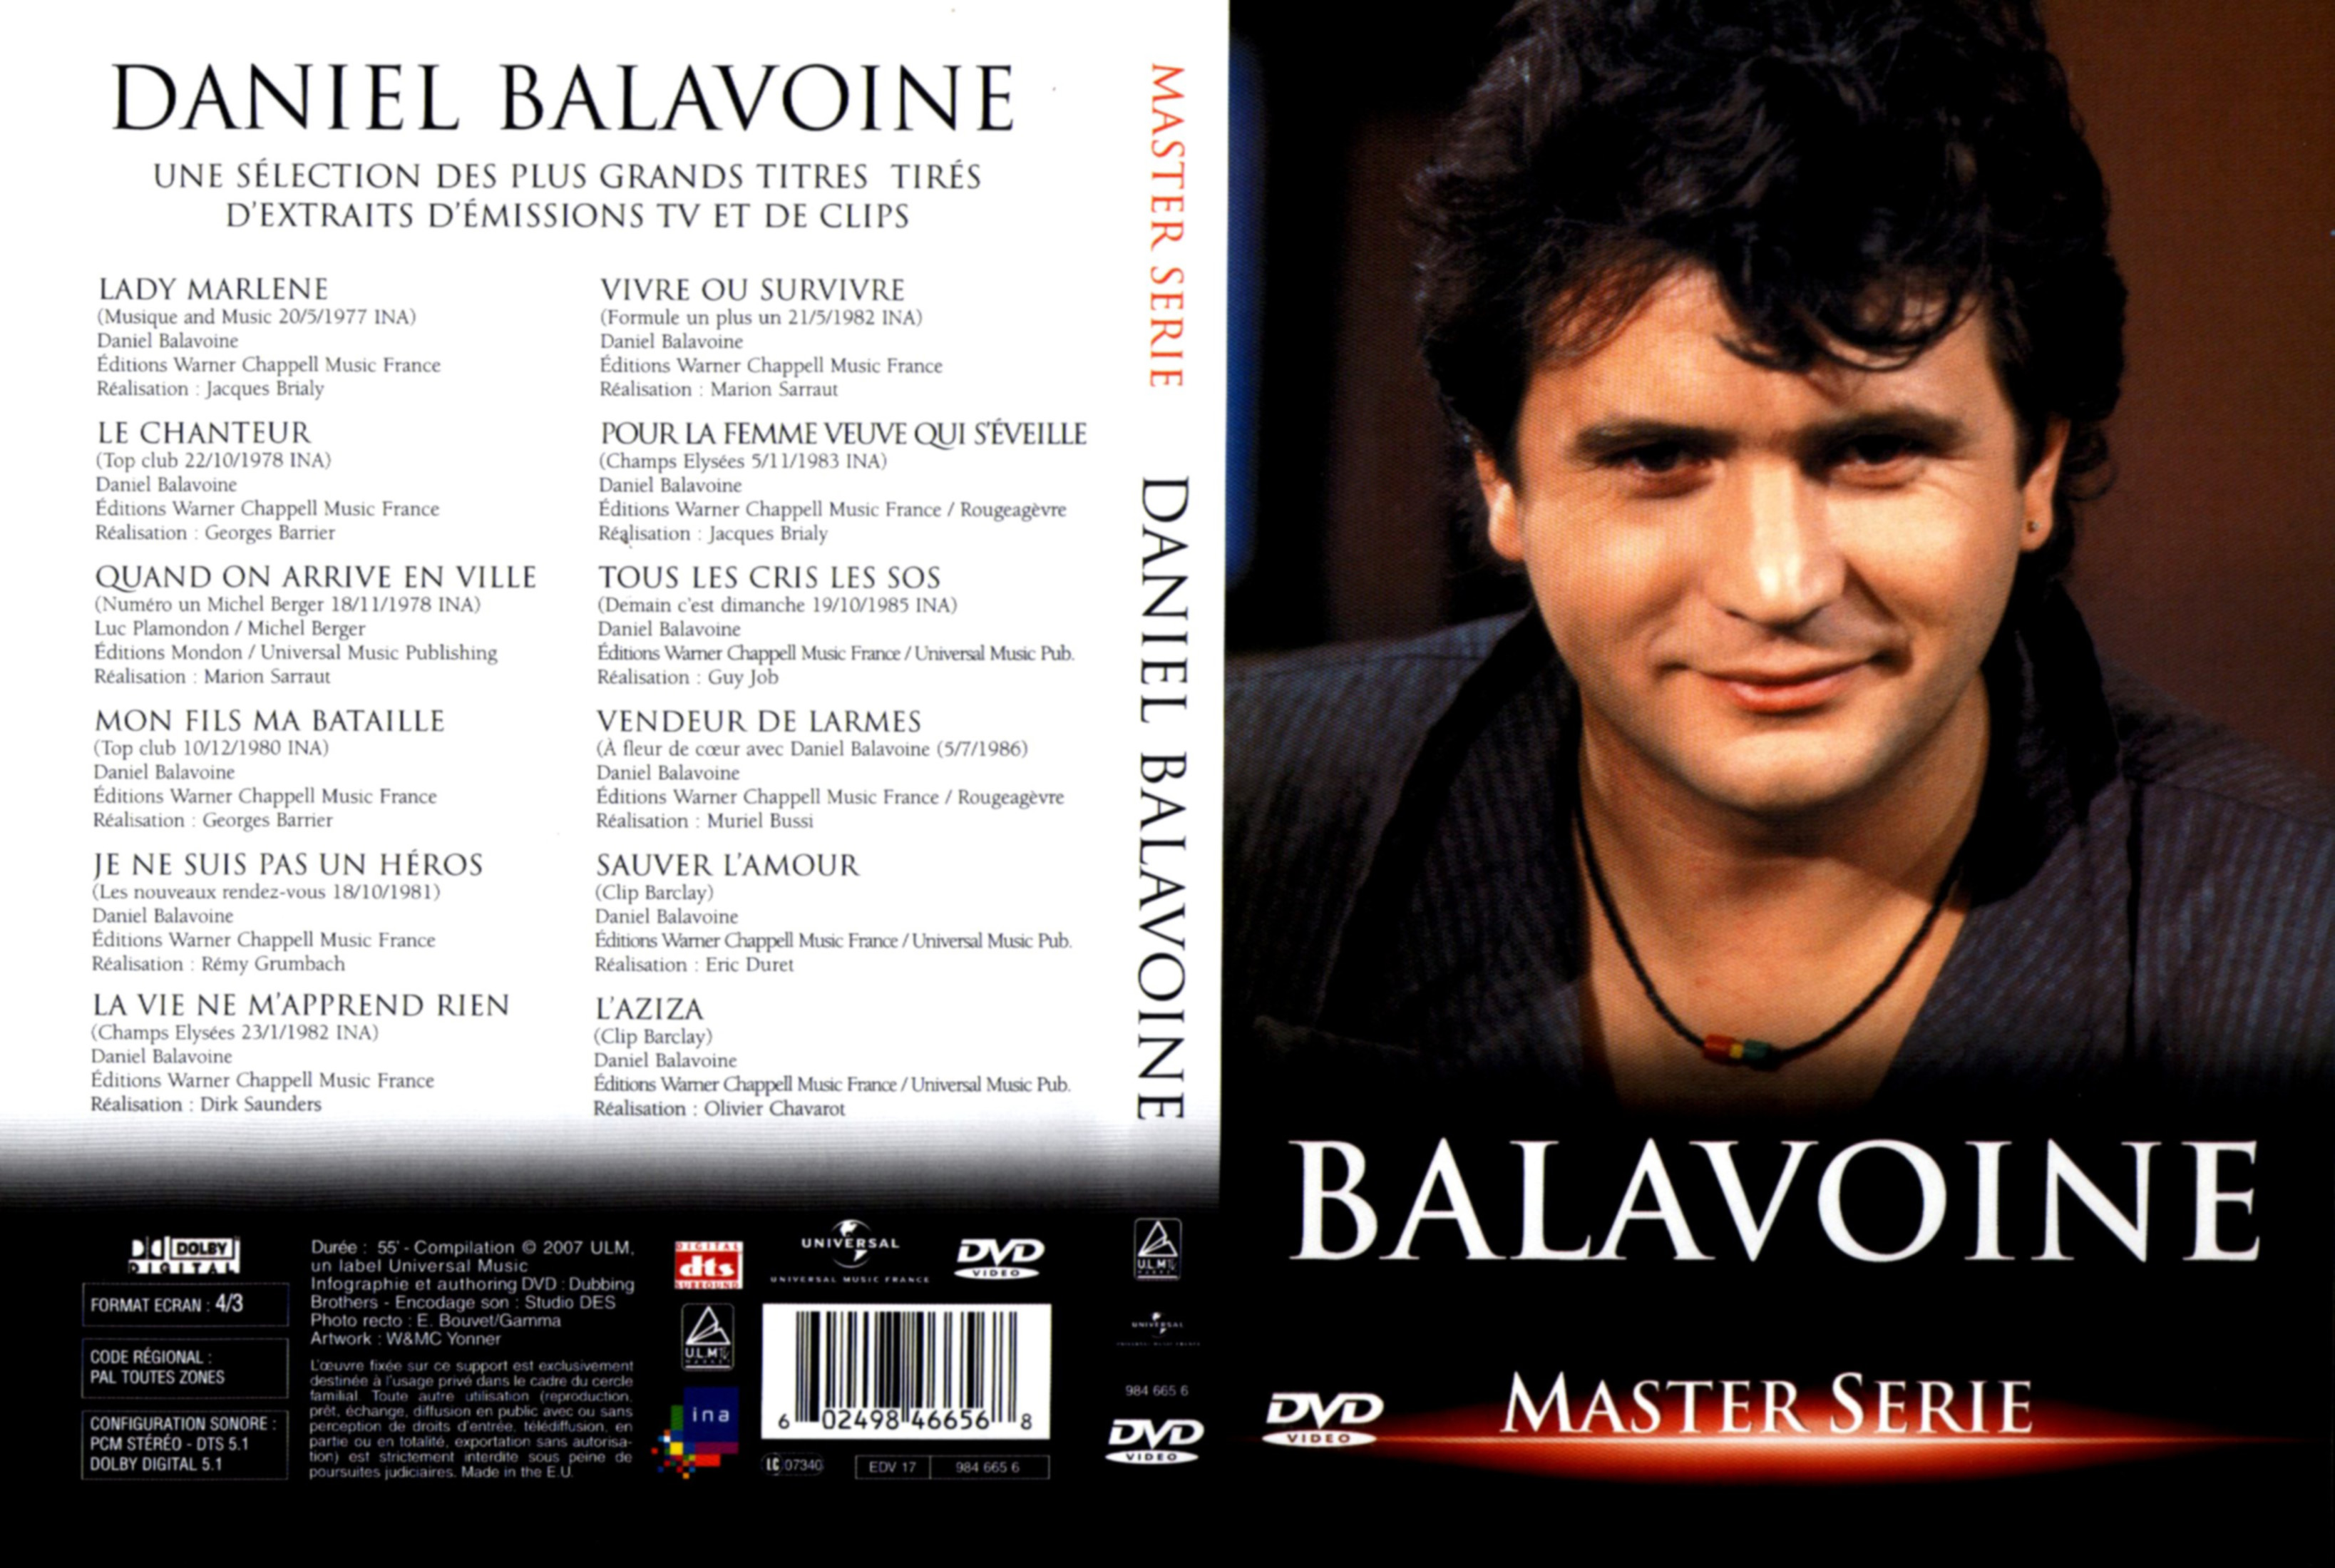 Jaquette DVD Daniel Balavoine - Master Serie